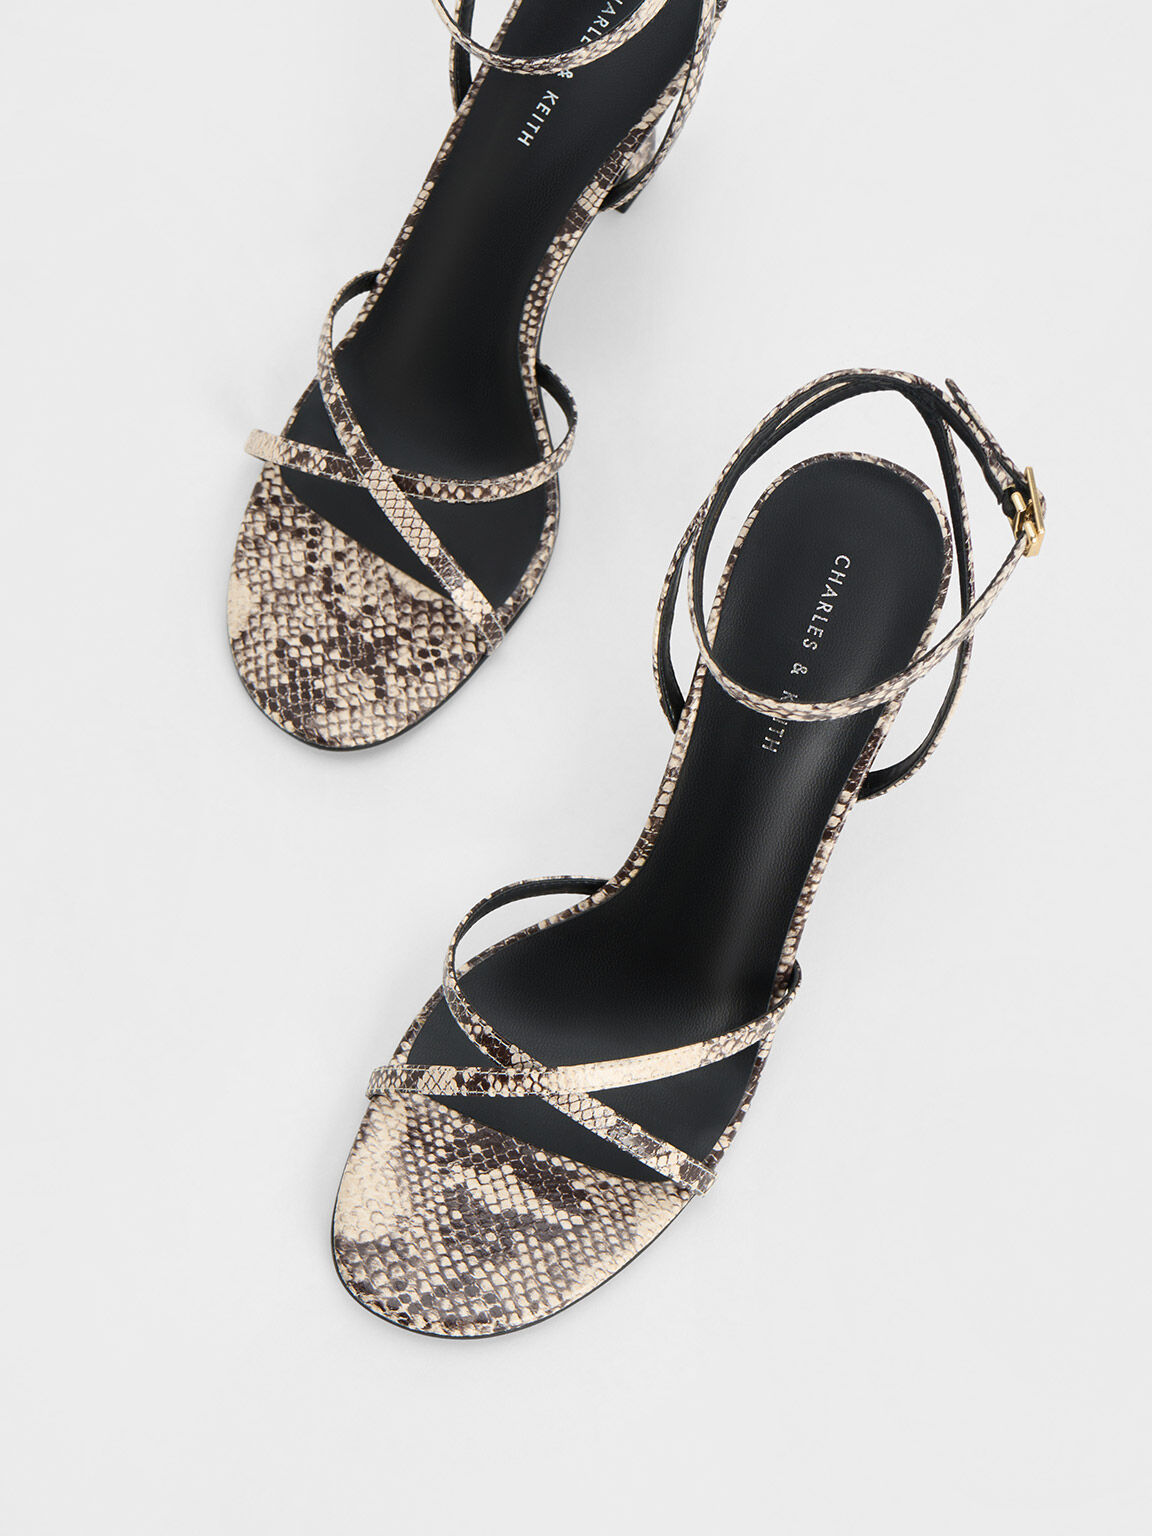 NEW! Leopard print heels - size 7 | Vinted